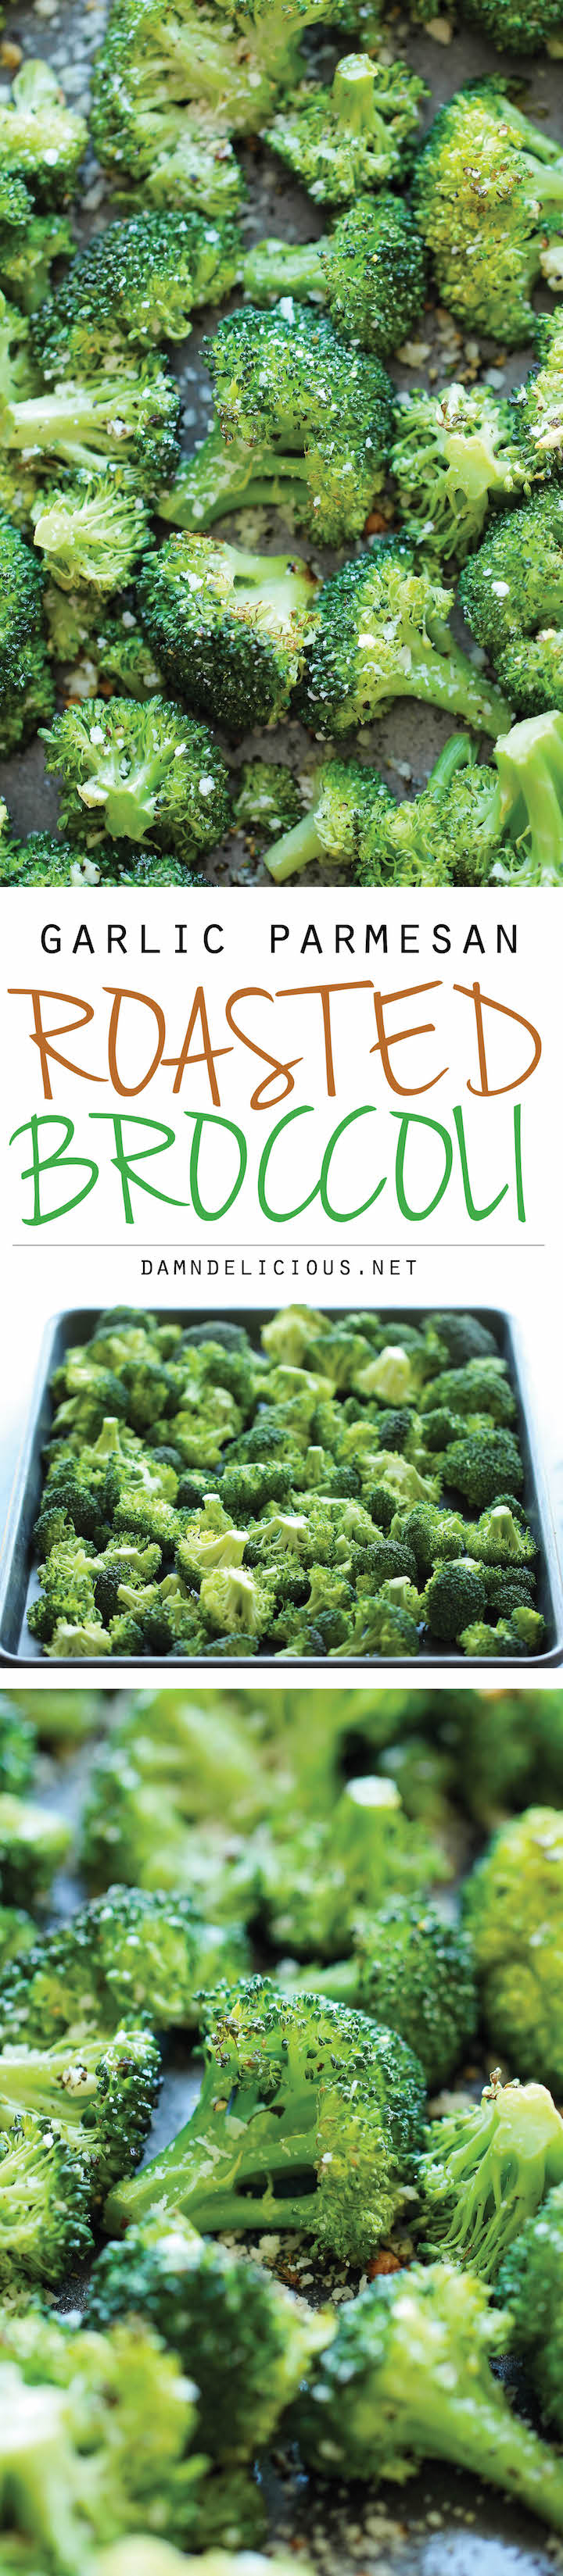 Garlic Parmesan Roasted Broccoli Damn Delicious